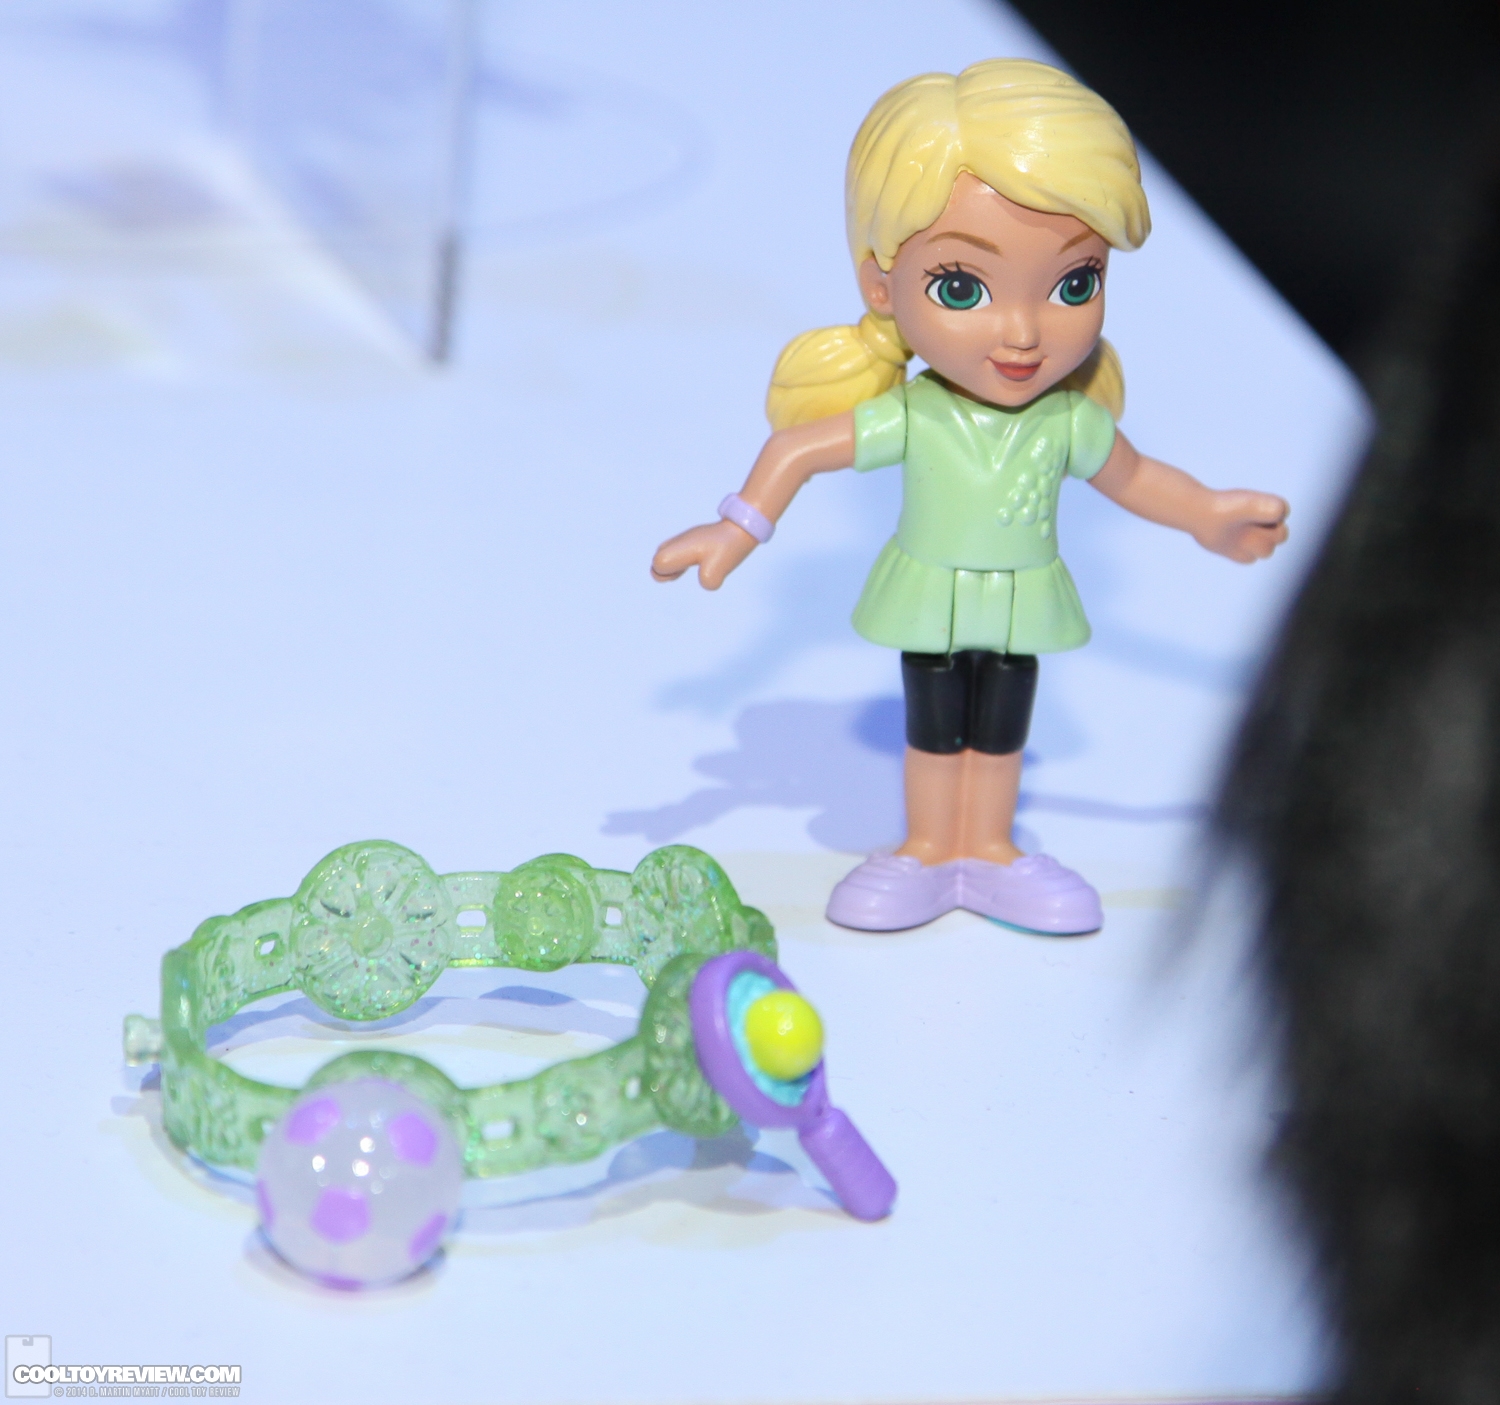 Toy-Fair-2014-Mattel-Showroom-305.jpg